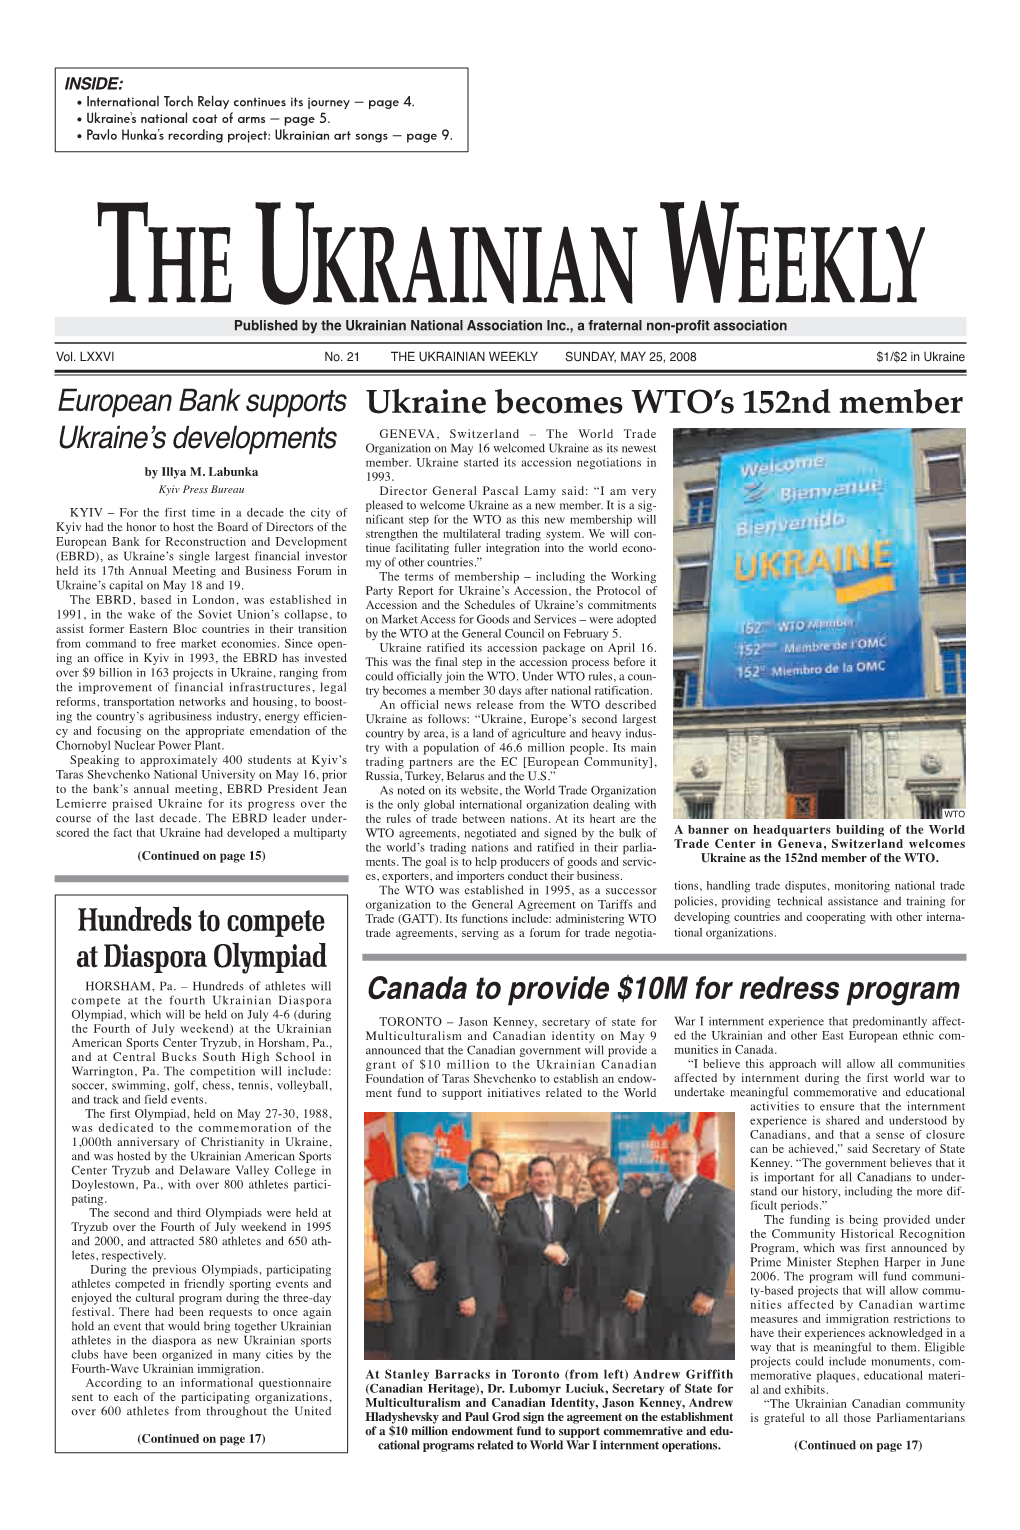 The Ukrainian Weekly 2008, No.21